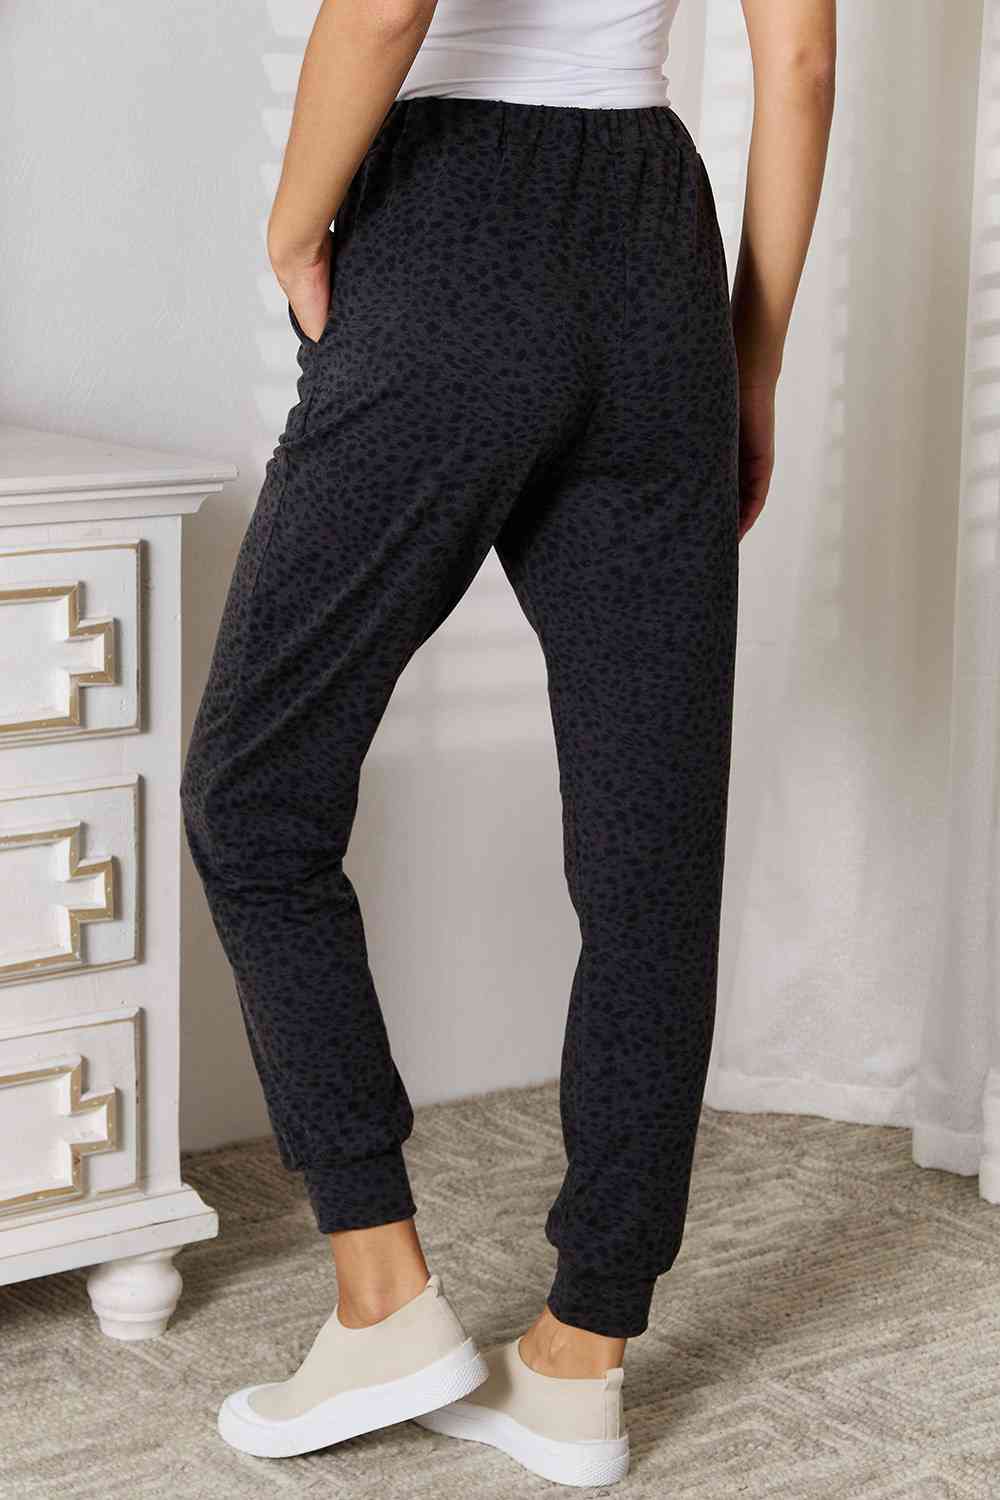 Leopard Legging with Pockets | Fashionsarah.com